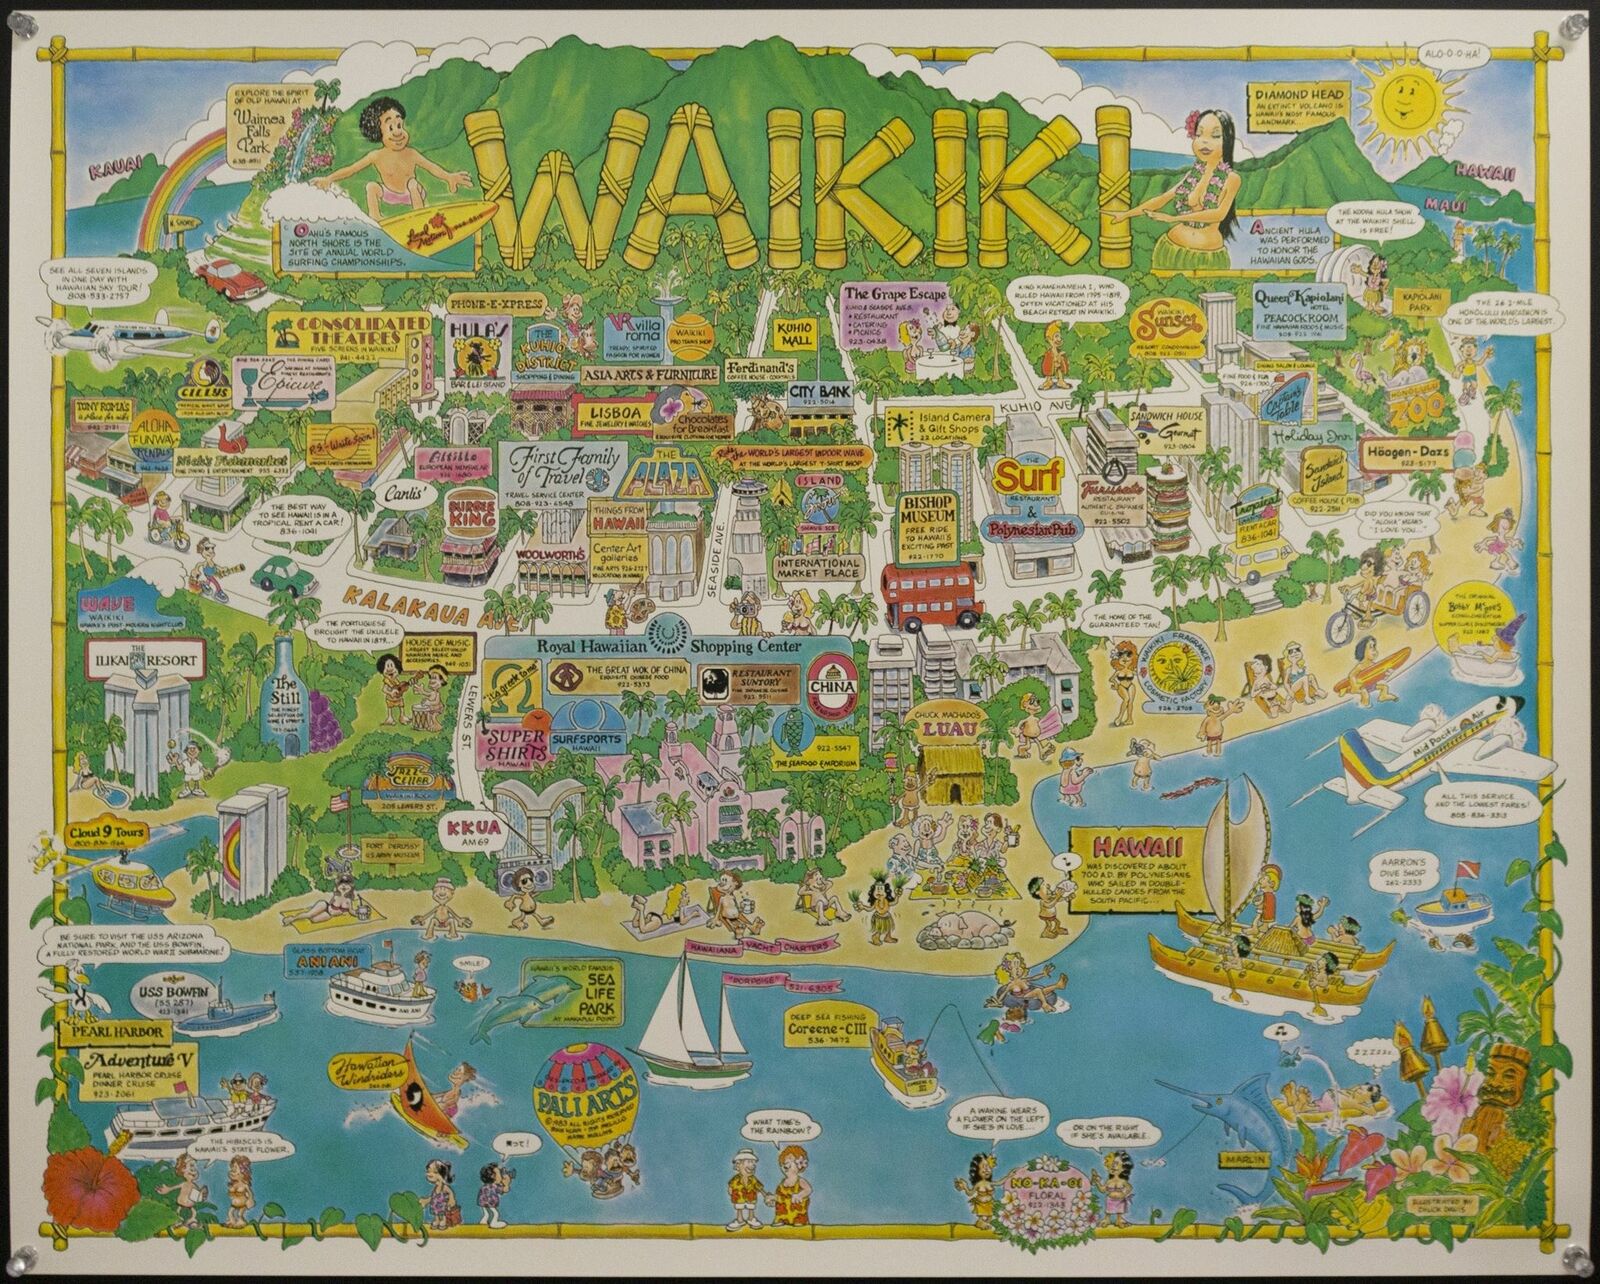 1983 Waikiki Honolulu Hawaii Pictorial Cartoon Map Poster by Chuck Davis Vintage